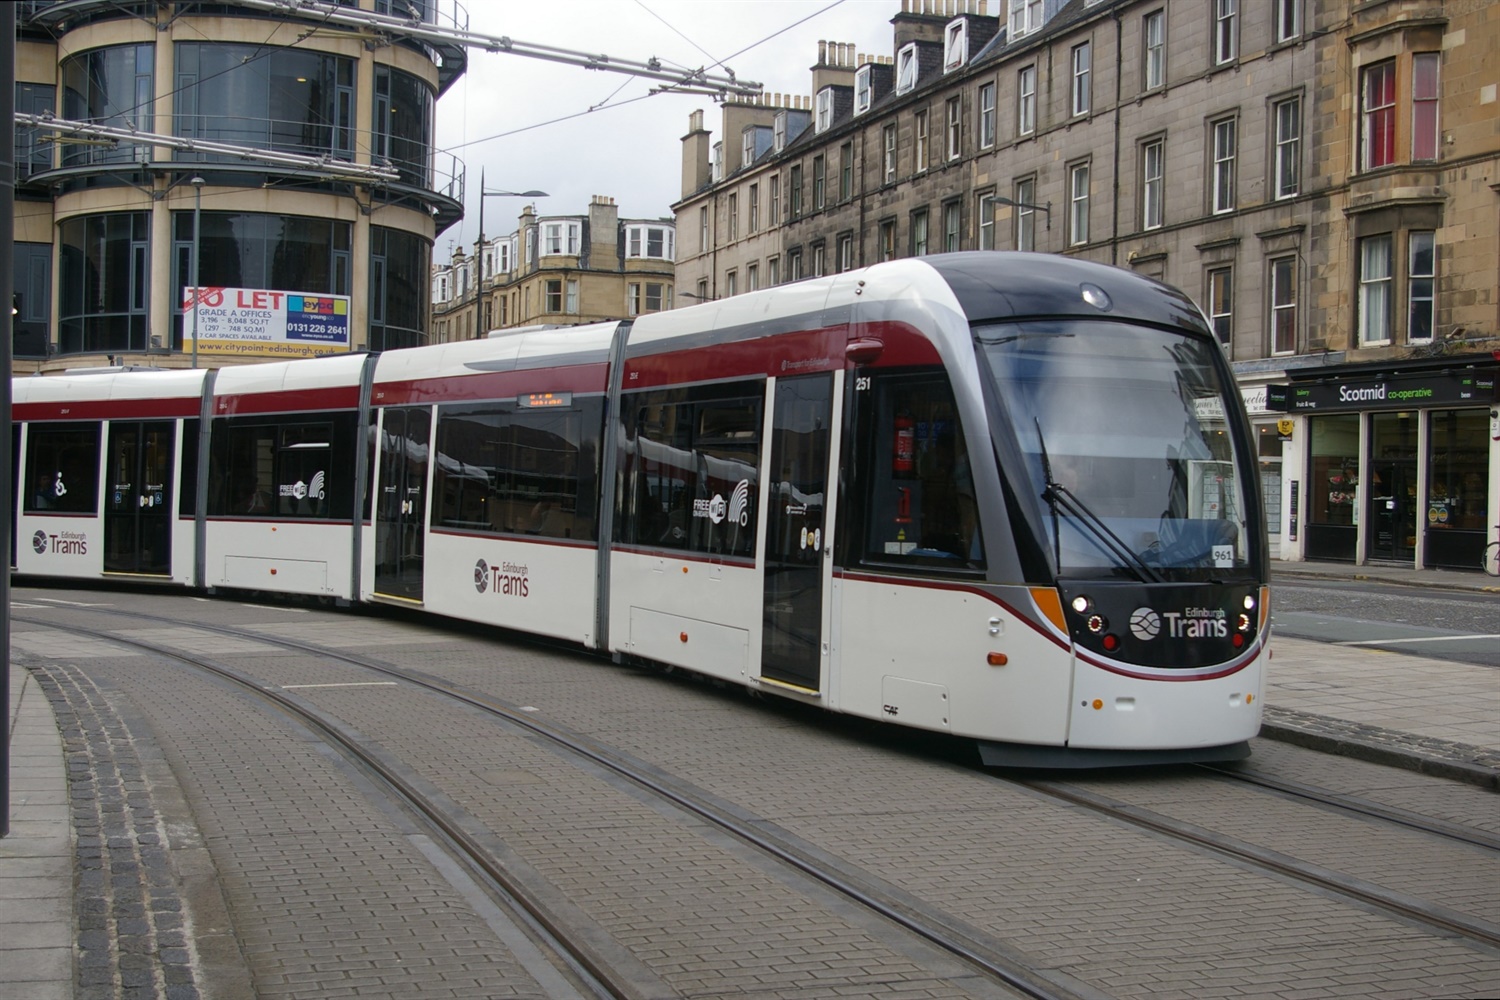 Edinburgh Tram extension could cost £145m